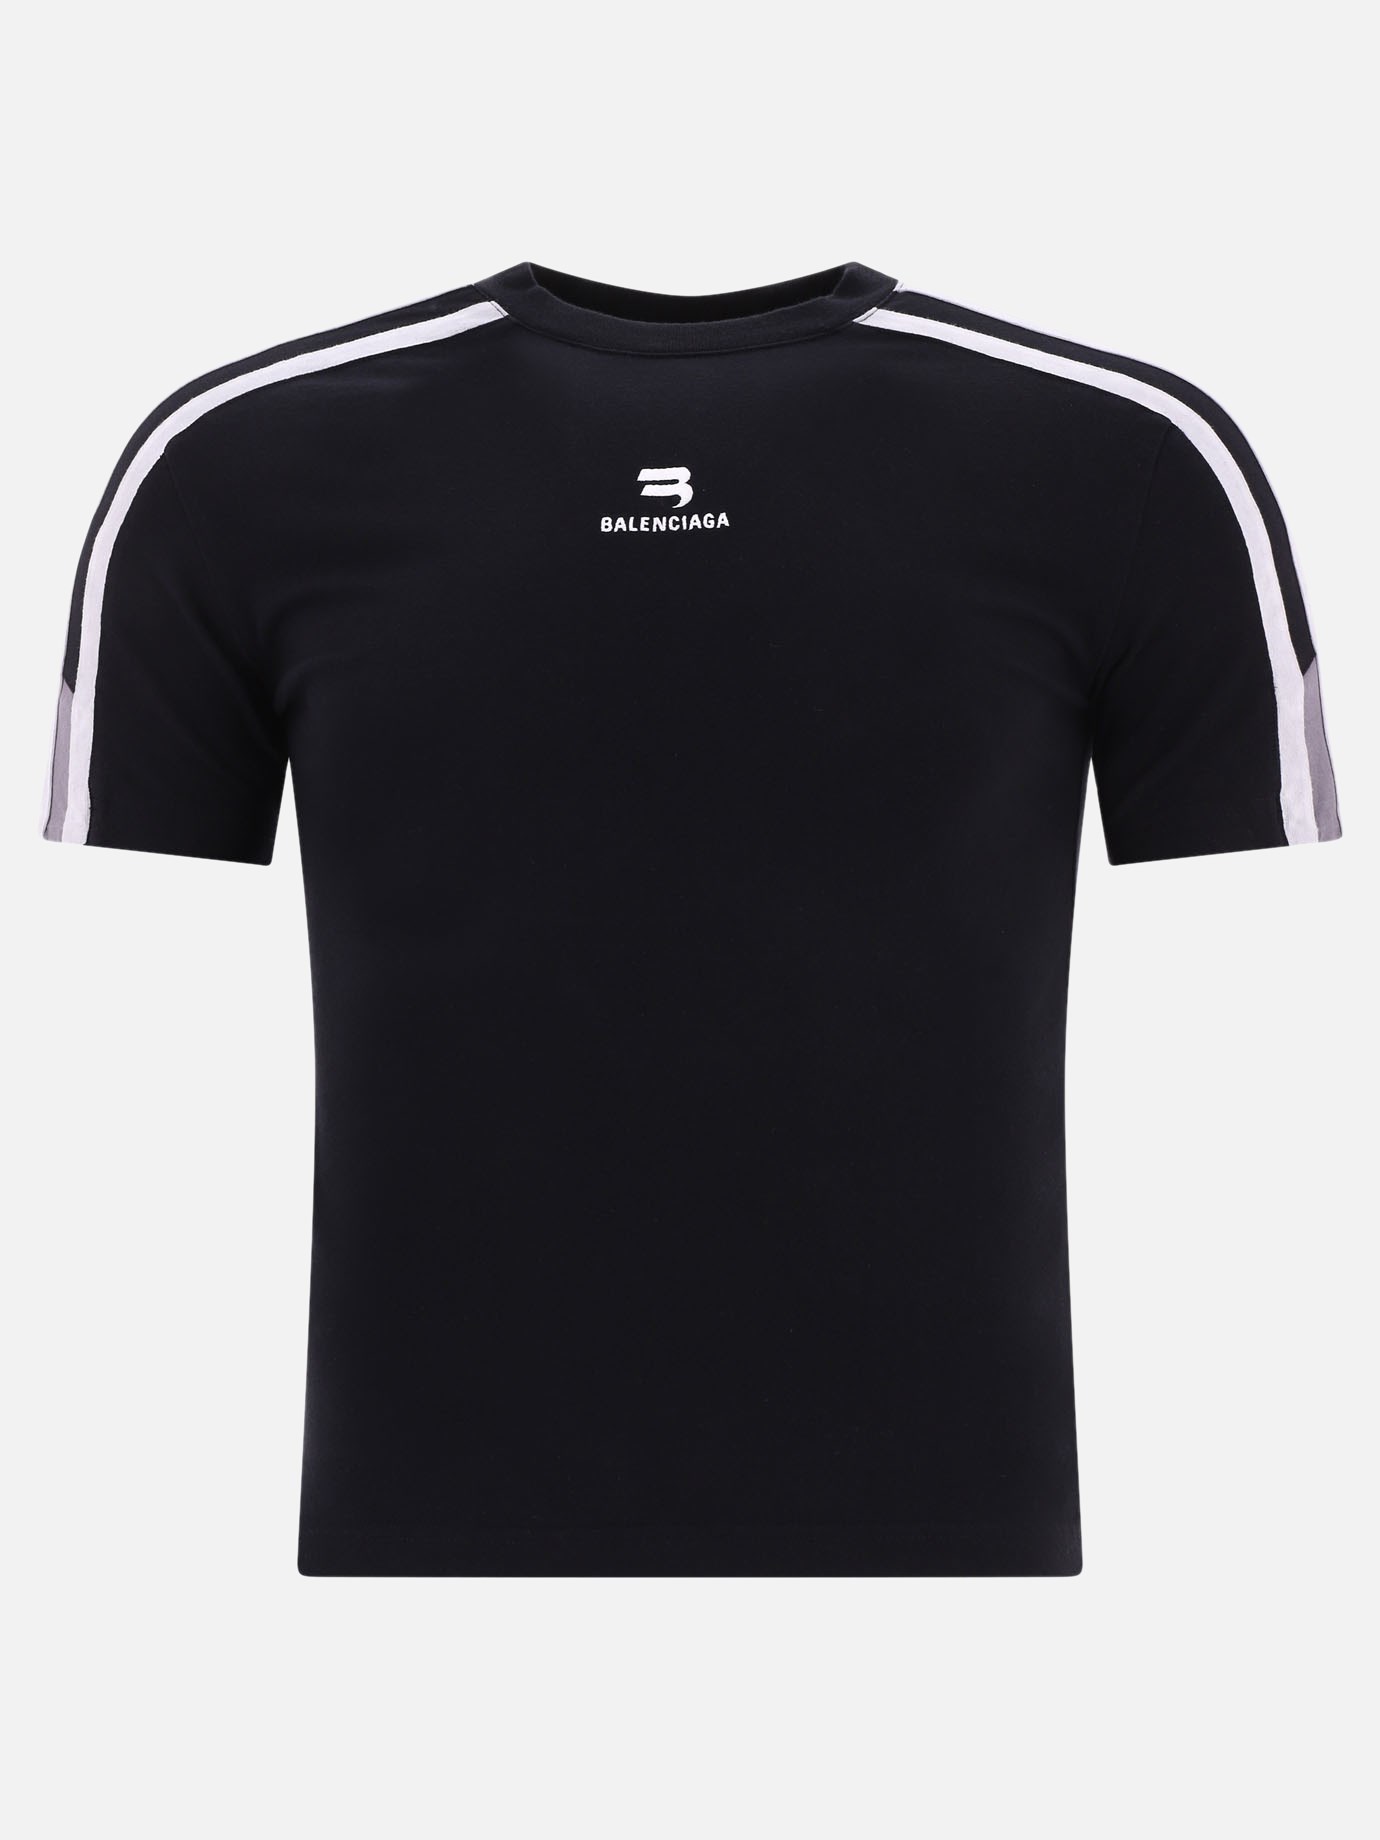  Sporty B  t-shirtby Balenciaga - 2